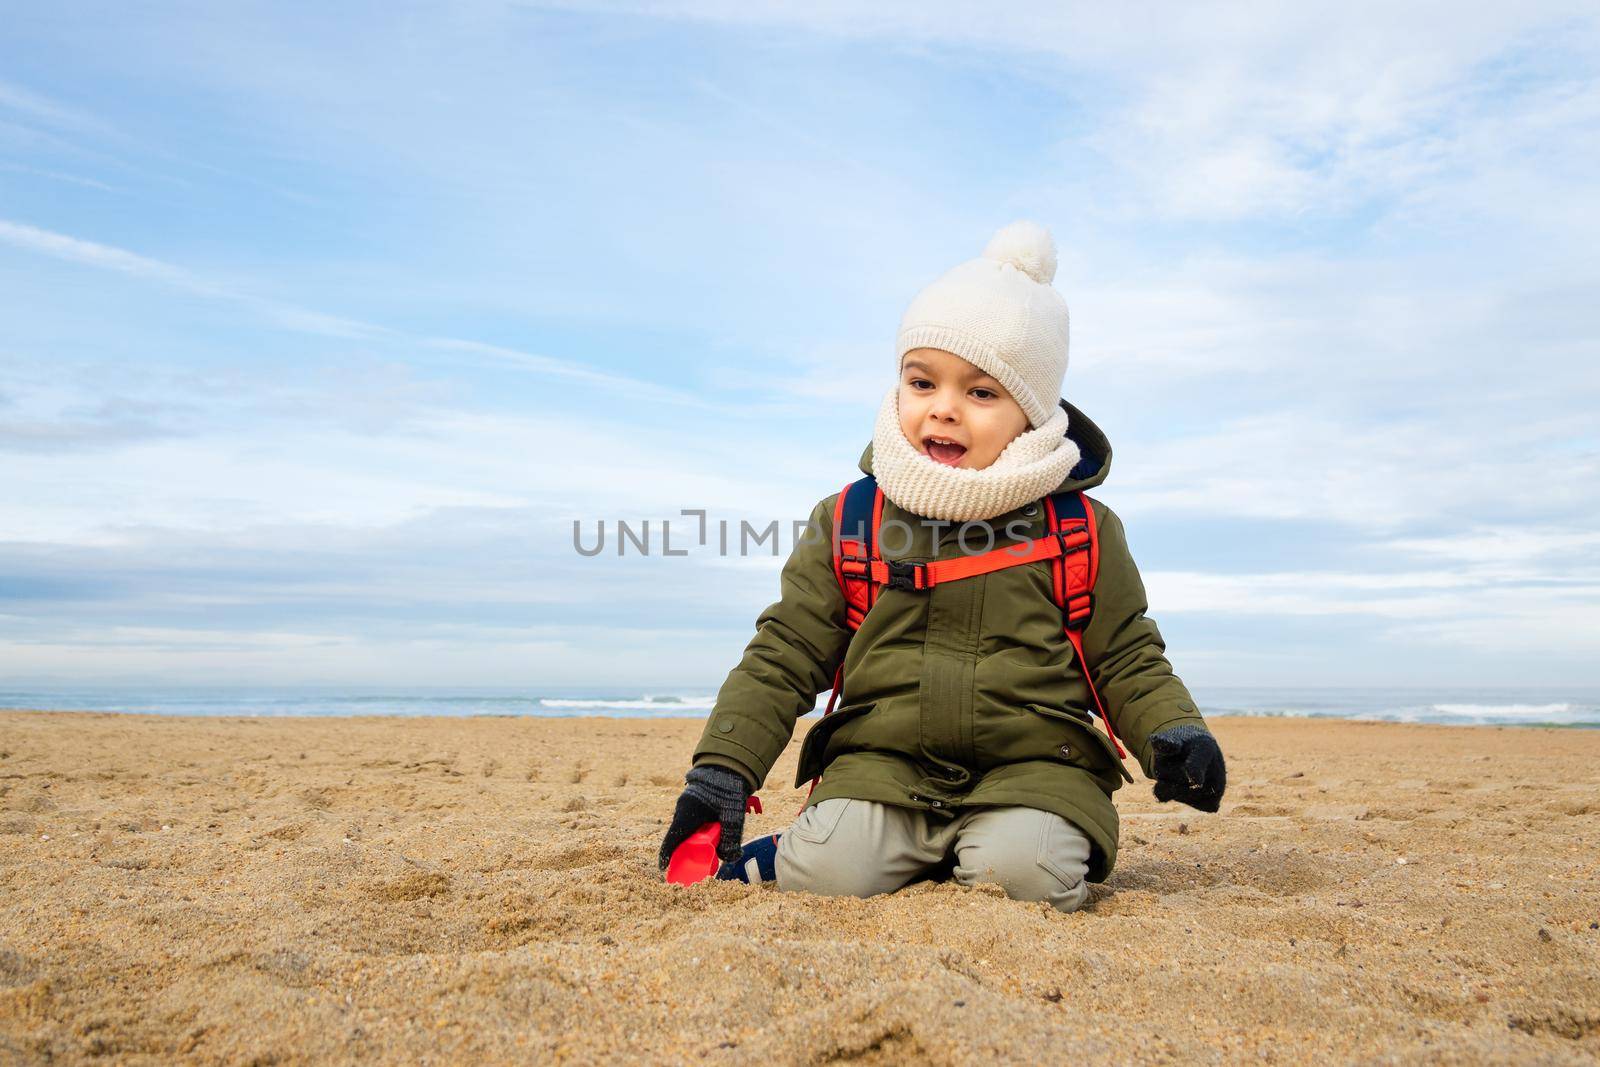 Little boy playing on beach in winter by dutourdumonde